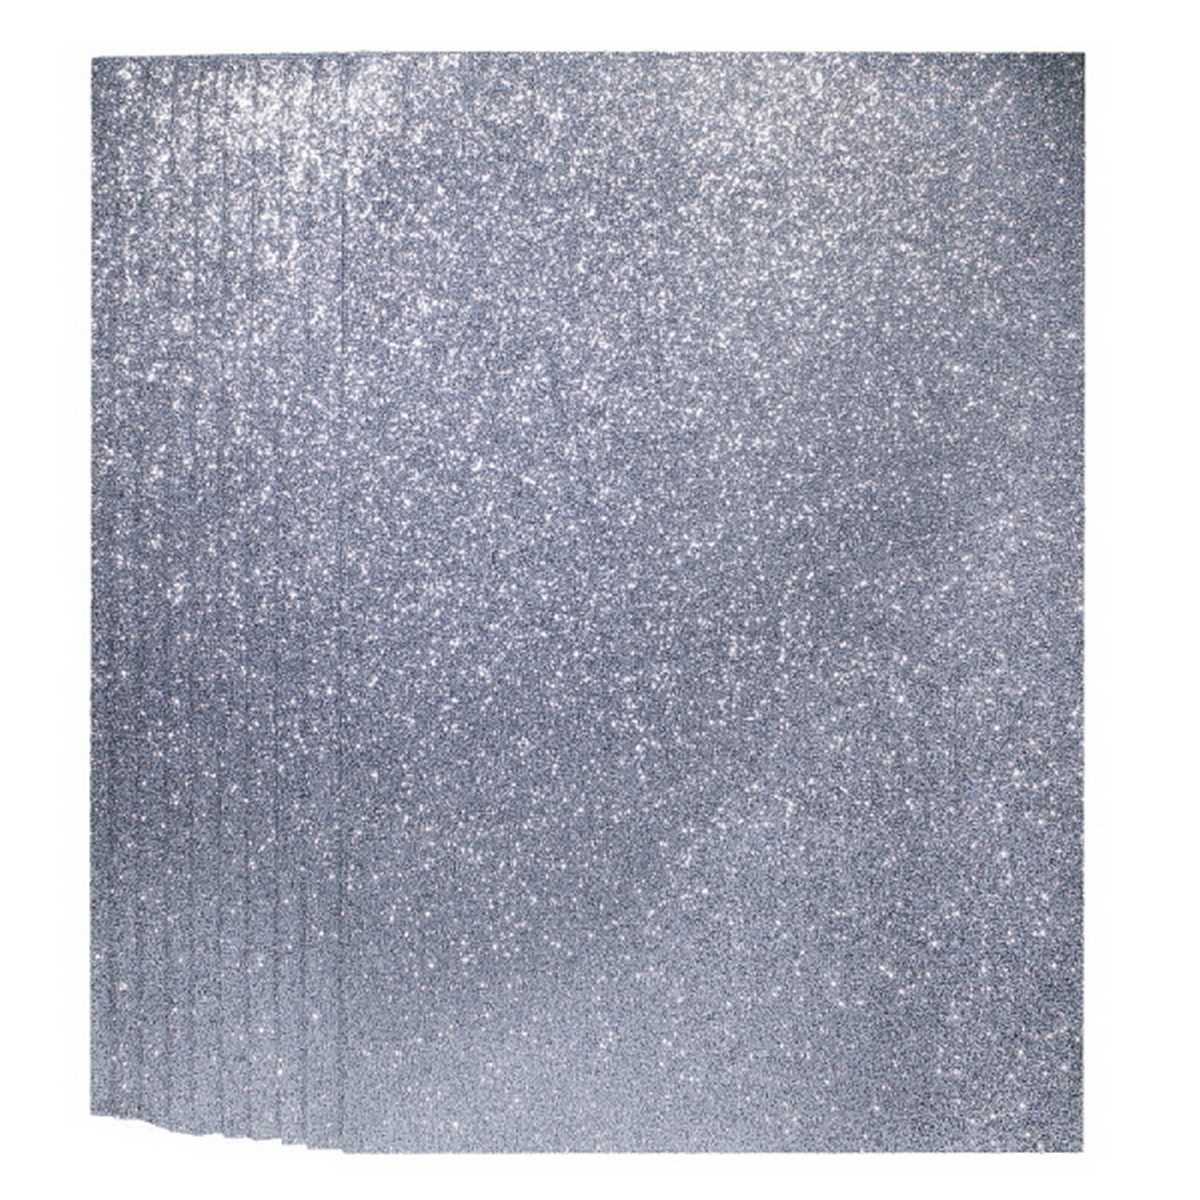 jags-mumbai Glitter Paper & Foam Sheet A4 Glitter Foam Sheet Without Stk Silver 00196SR